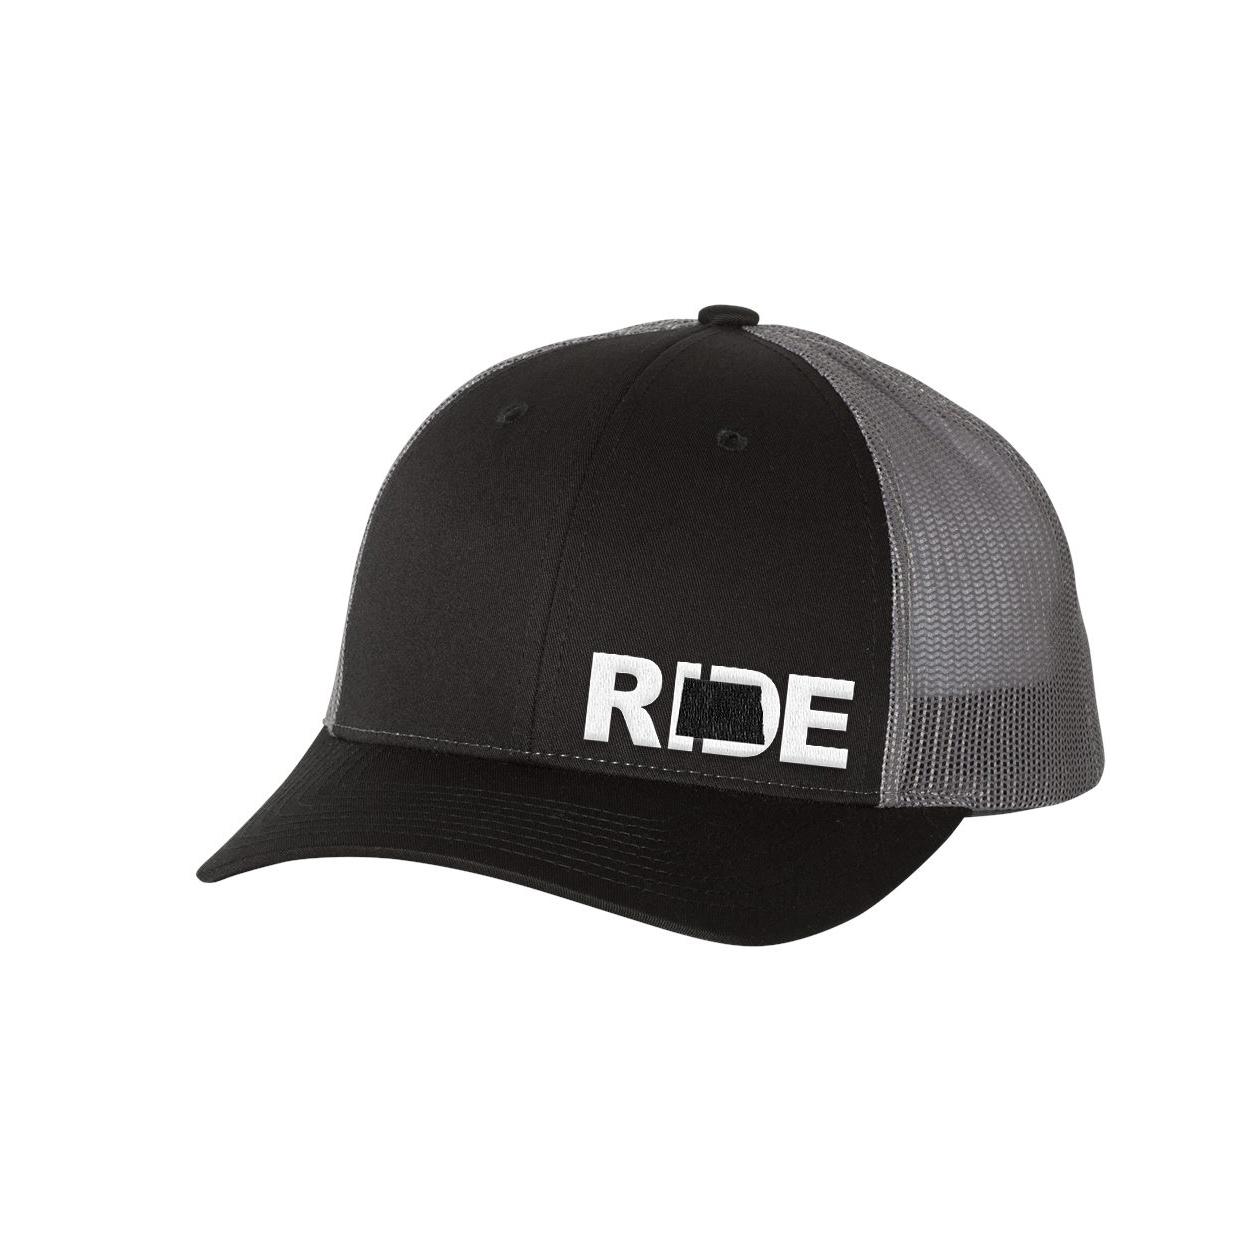 Ride North Dakota Night Out Embroidered Snapback Trucker Hat Black/Gray